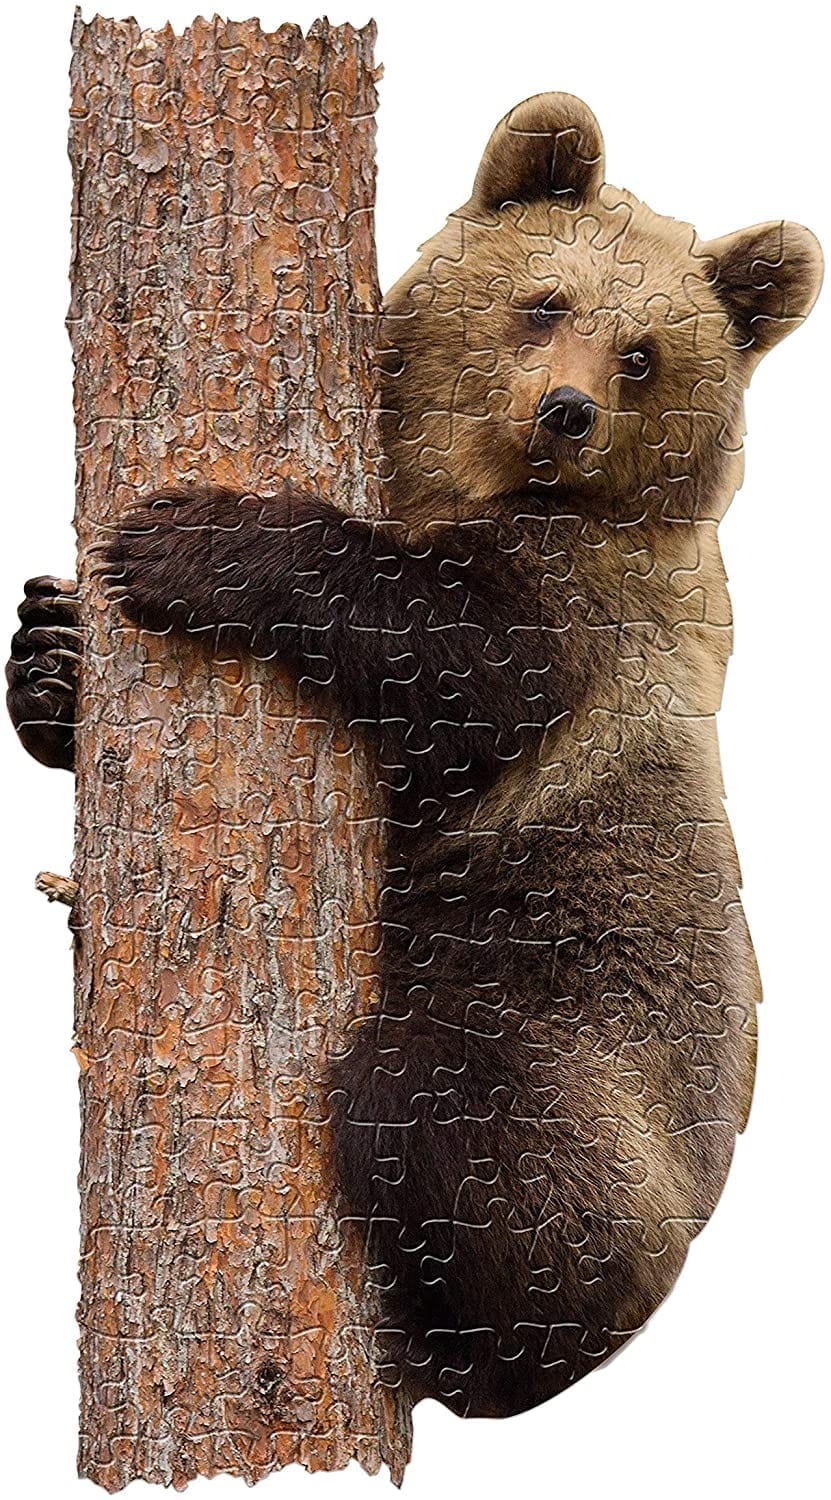 Madd Capp: I AM Lil’ Bear: 100 Piece Puzzle